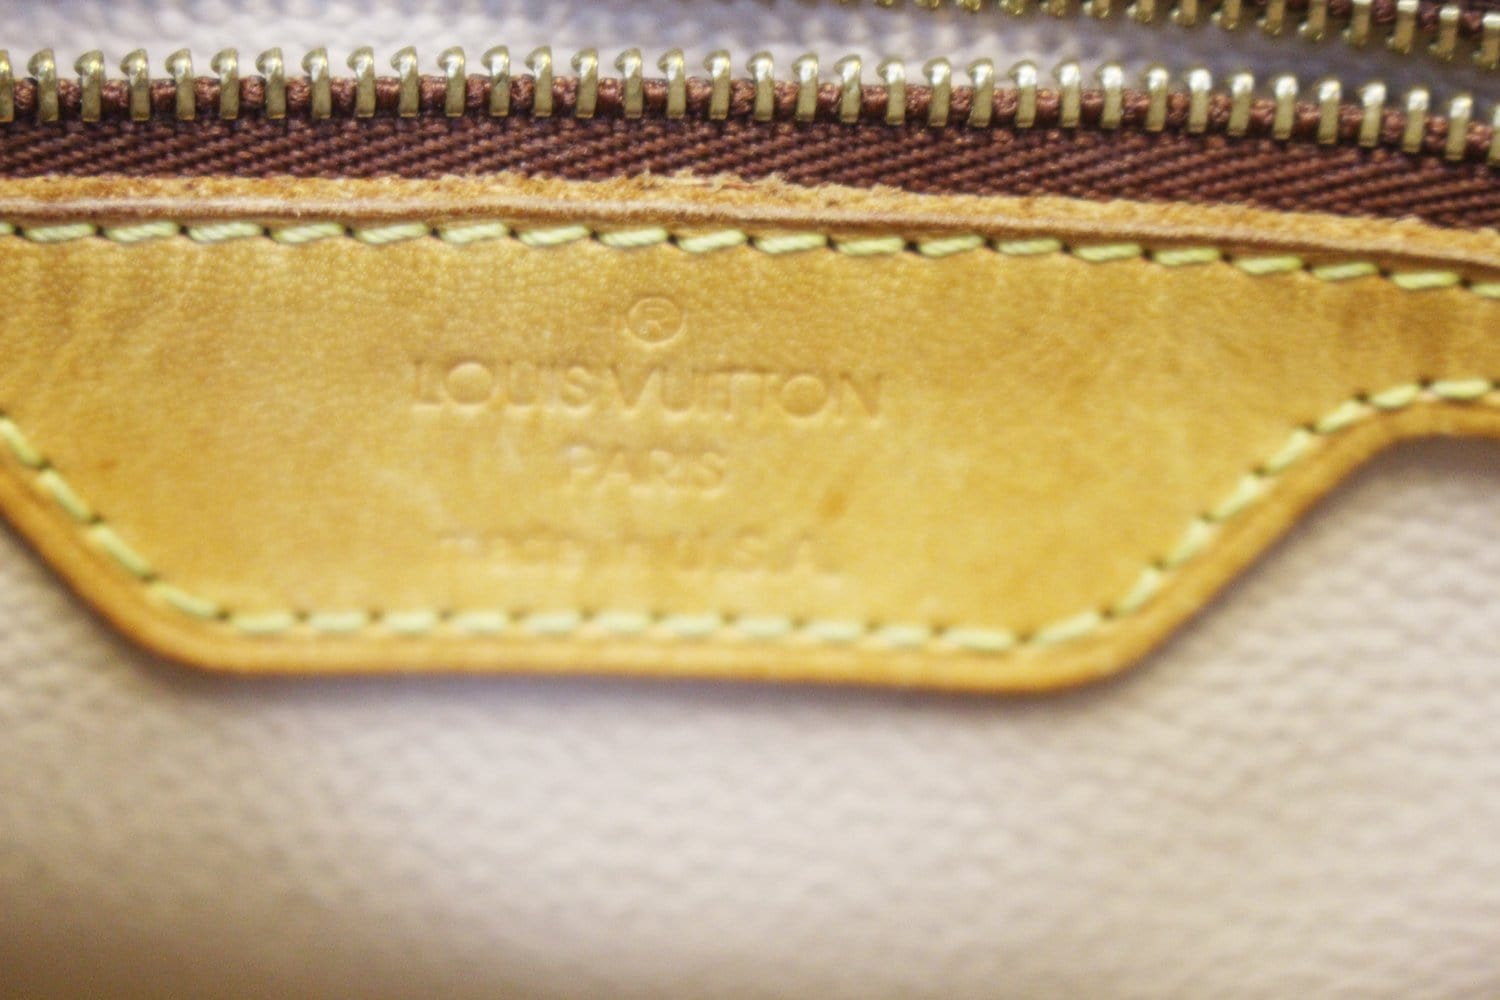 Louis Vuitton Monogram Empreinte Womens Bucket Bags, Grey, * Inventory Confirmation Required